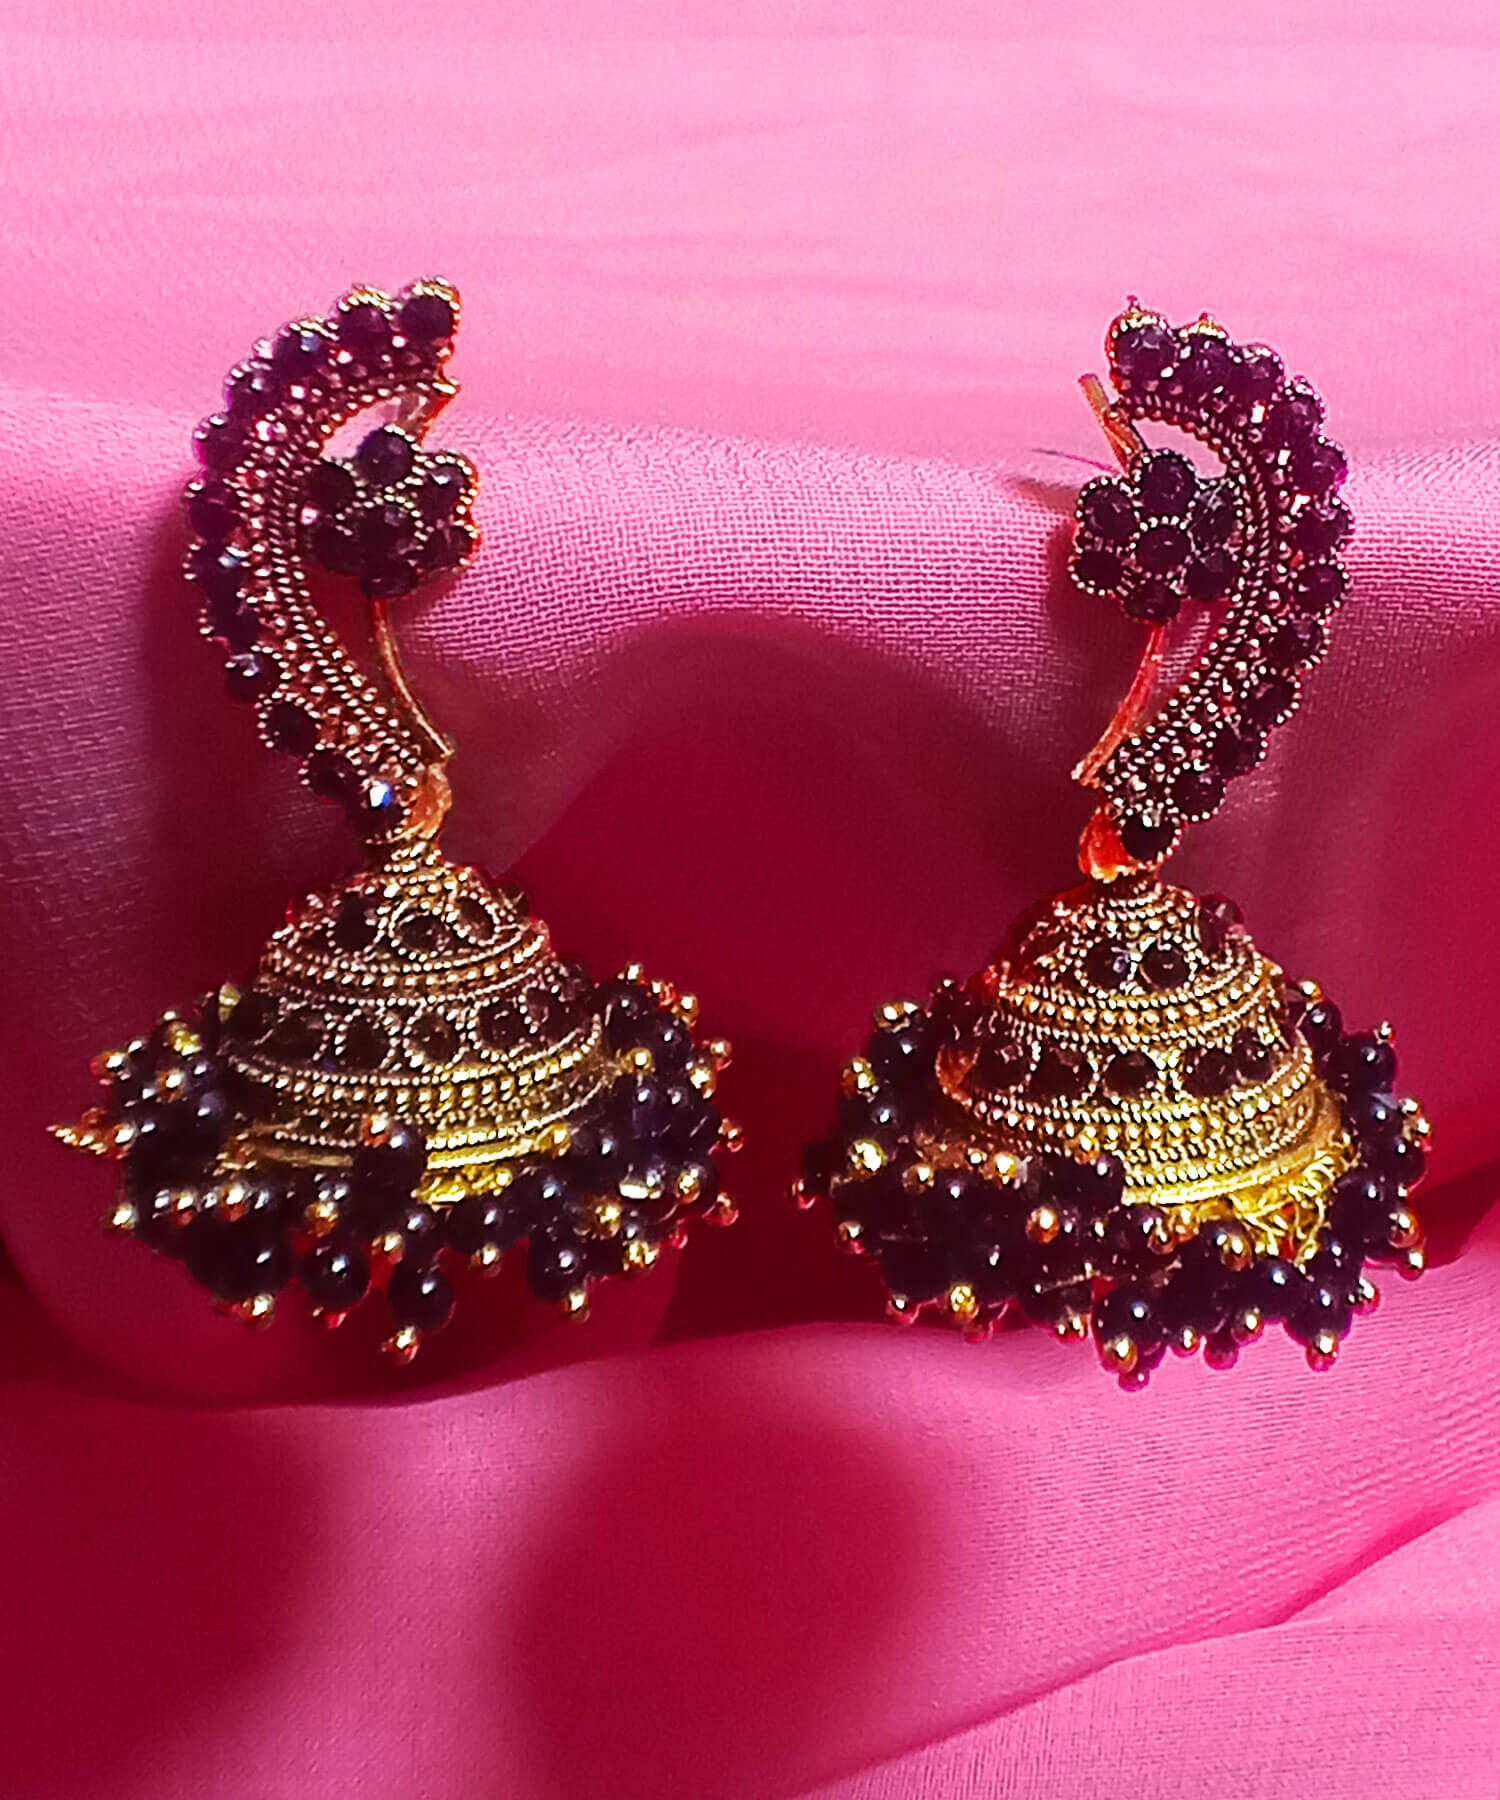 Buy Yaarita's Gold Plated Black Color Beautiful Jhumki Earring